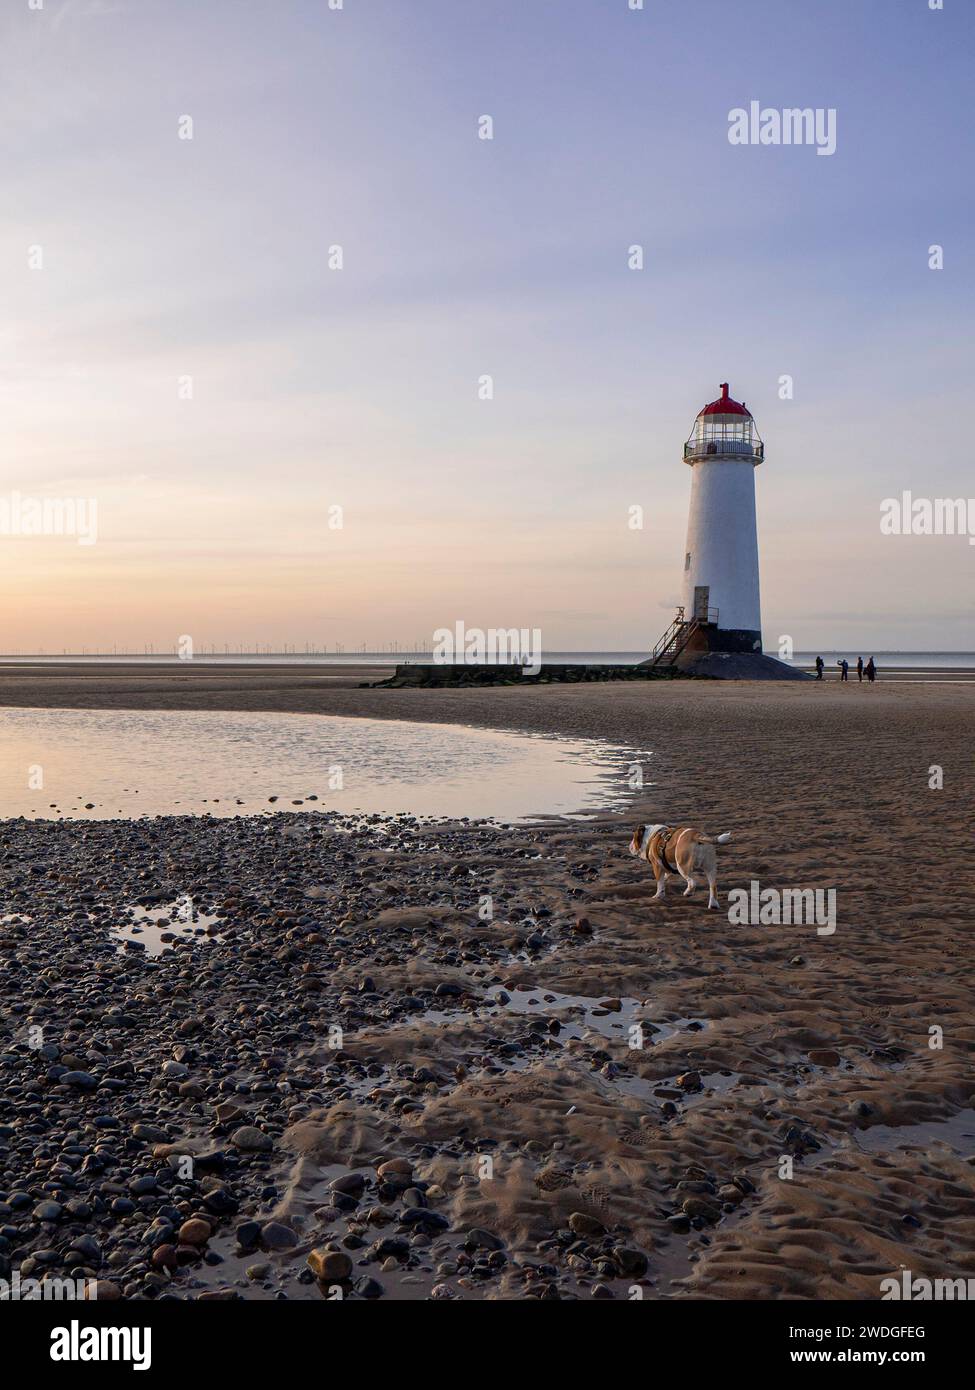 Bulldog strolling across Talacre Beach near Point of Ayr Lighthouse at sunset, Talacre, Flintshire, Wales, UK Stock Photo